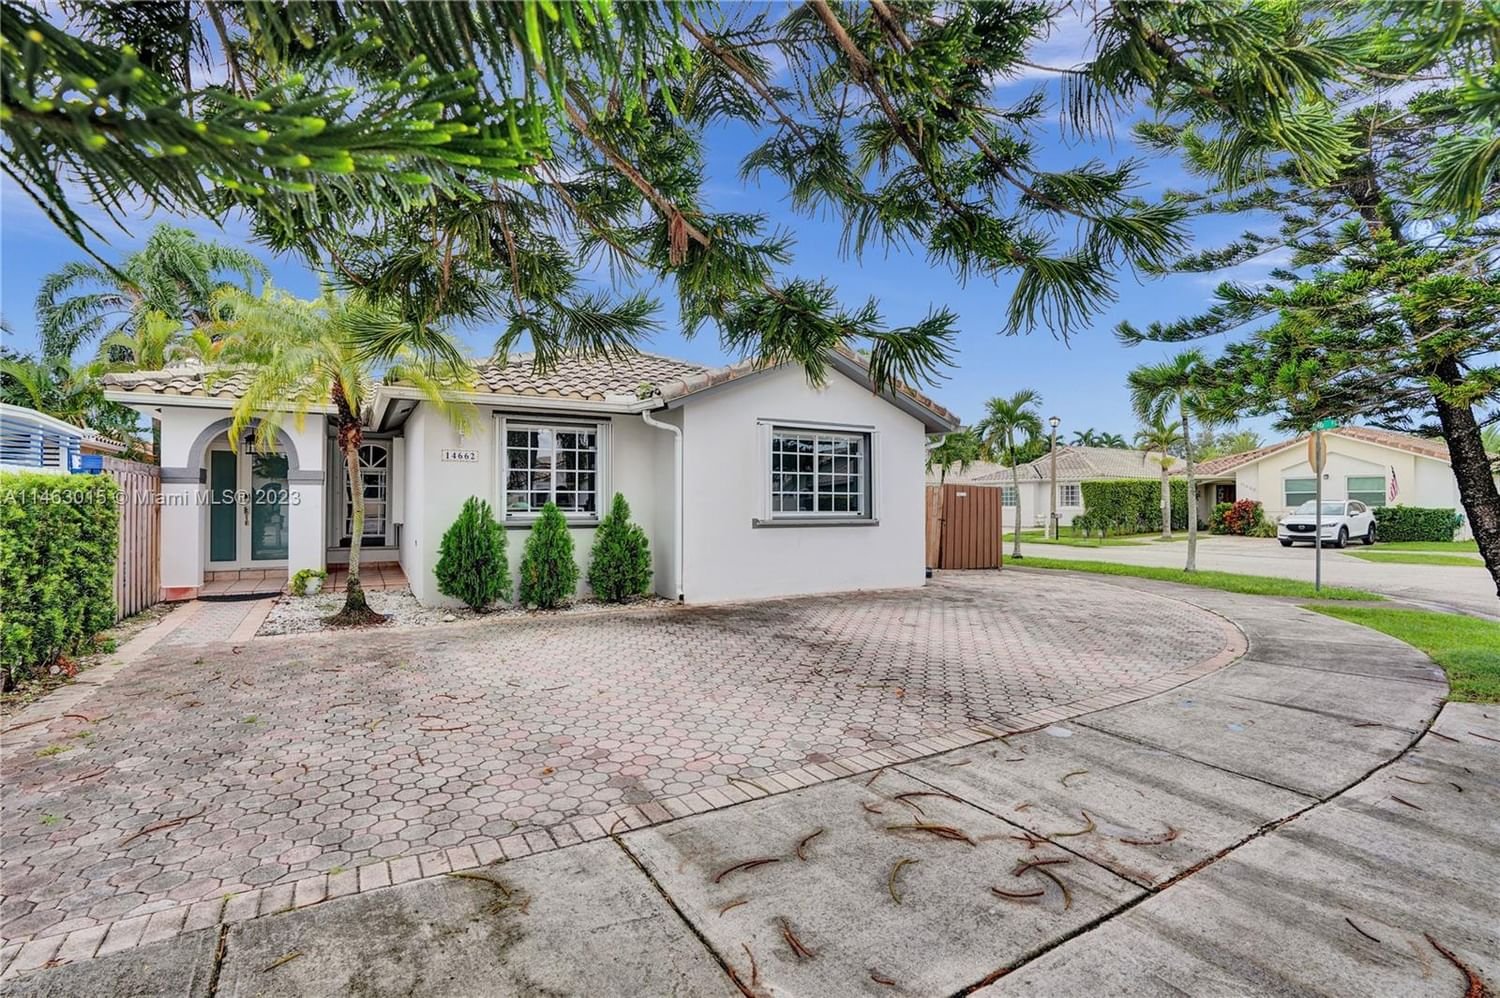 Real estate property located at 14662 114th Ter, Miami-Dade County, Miami, FL